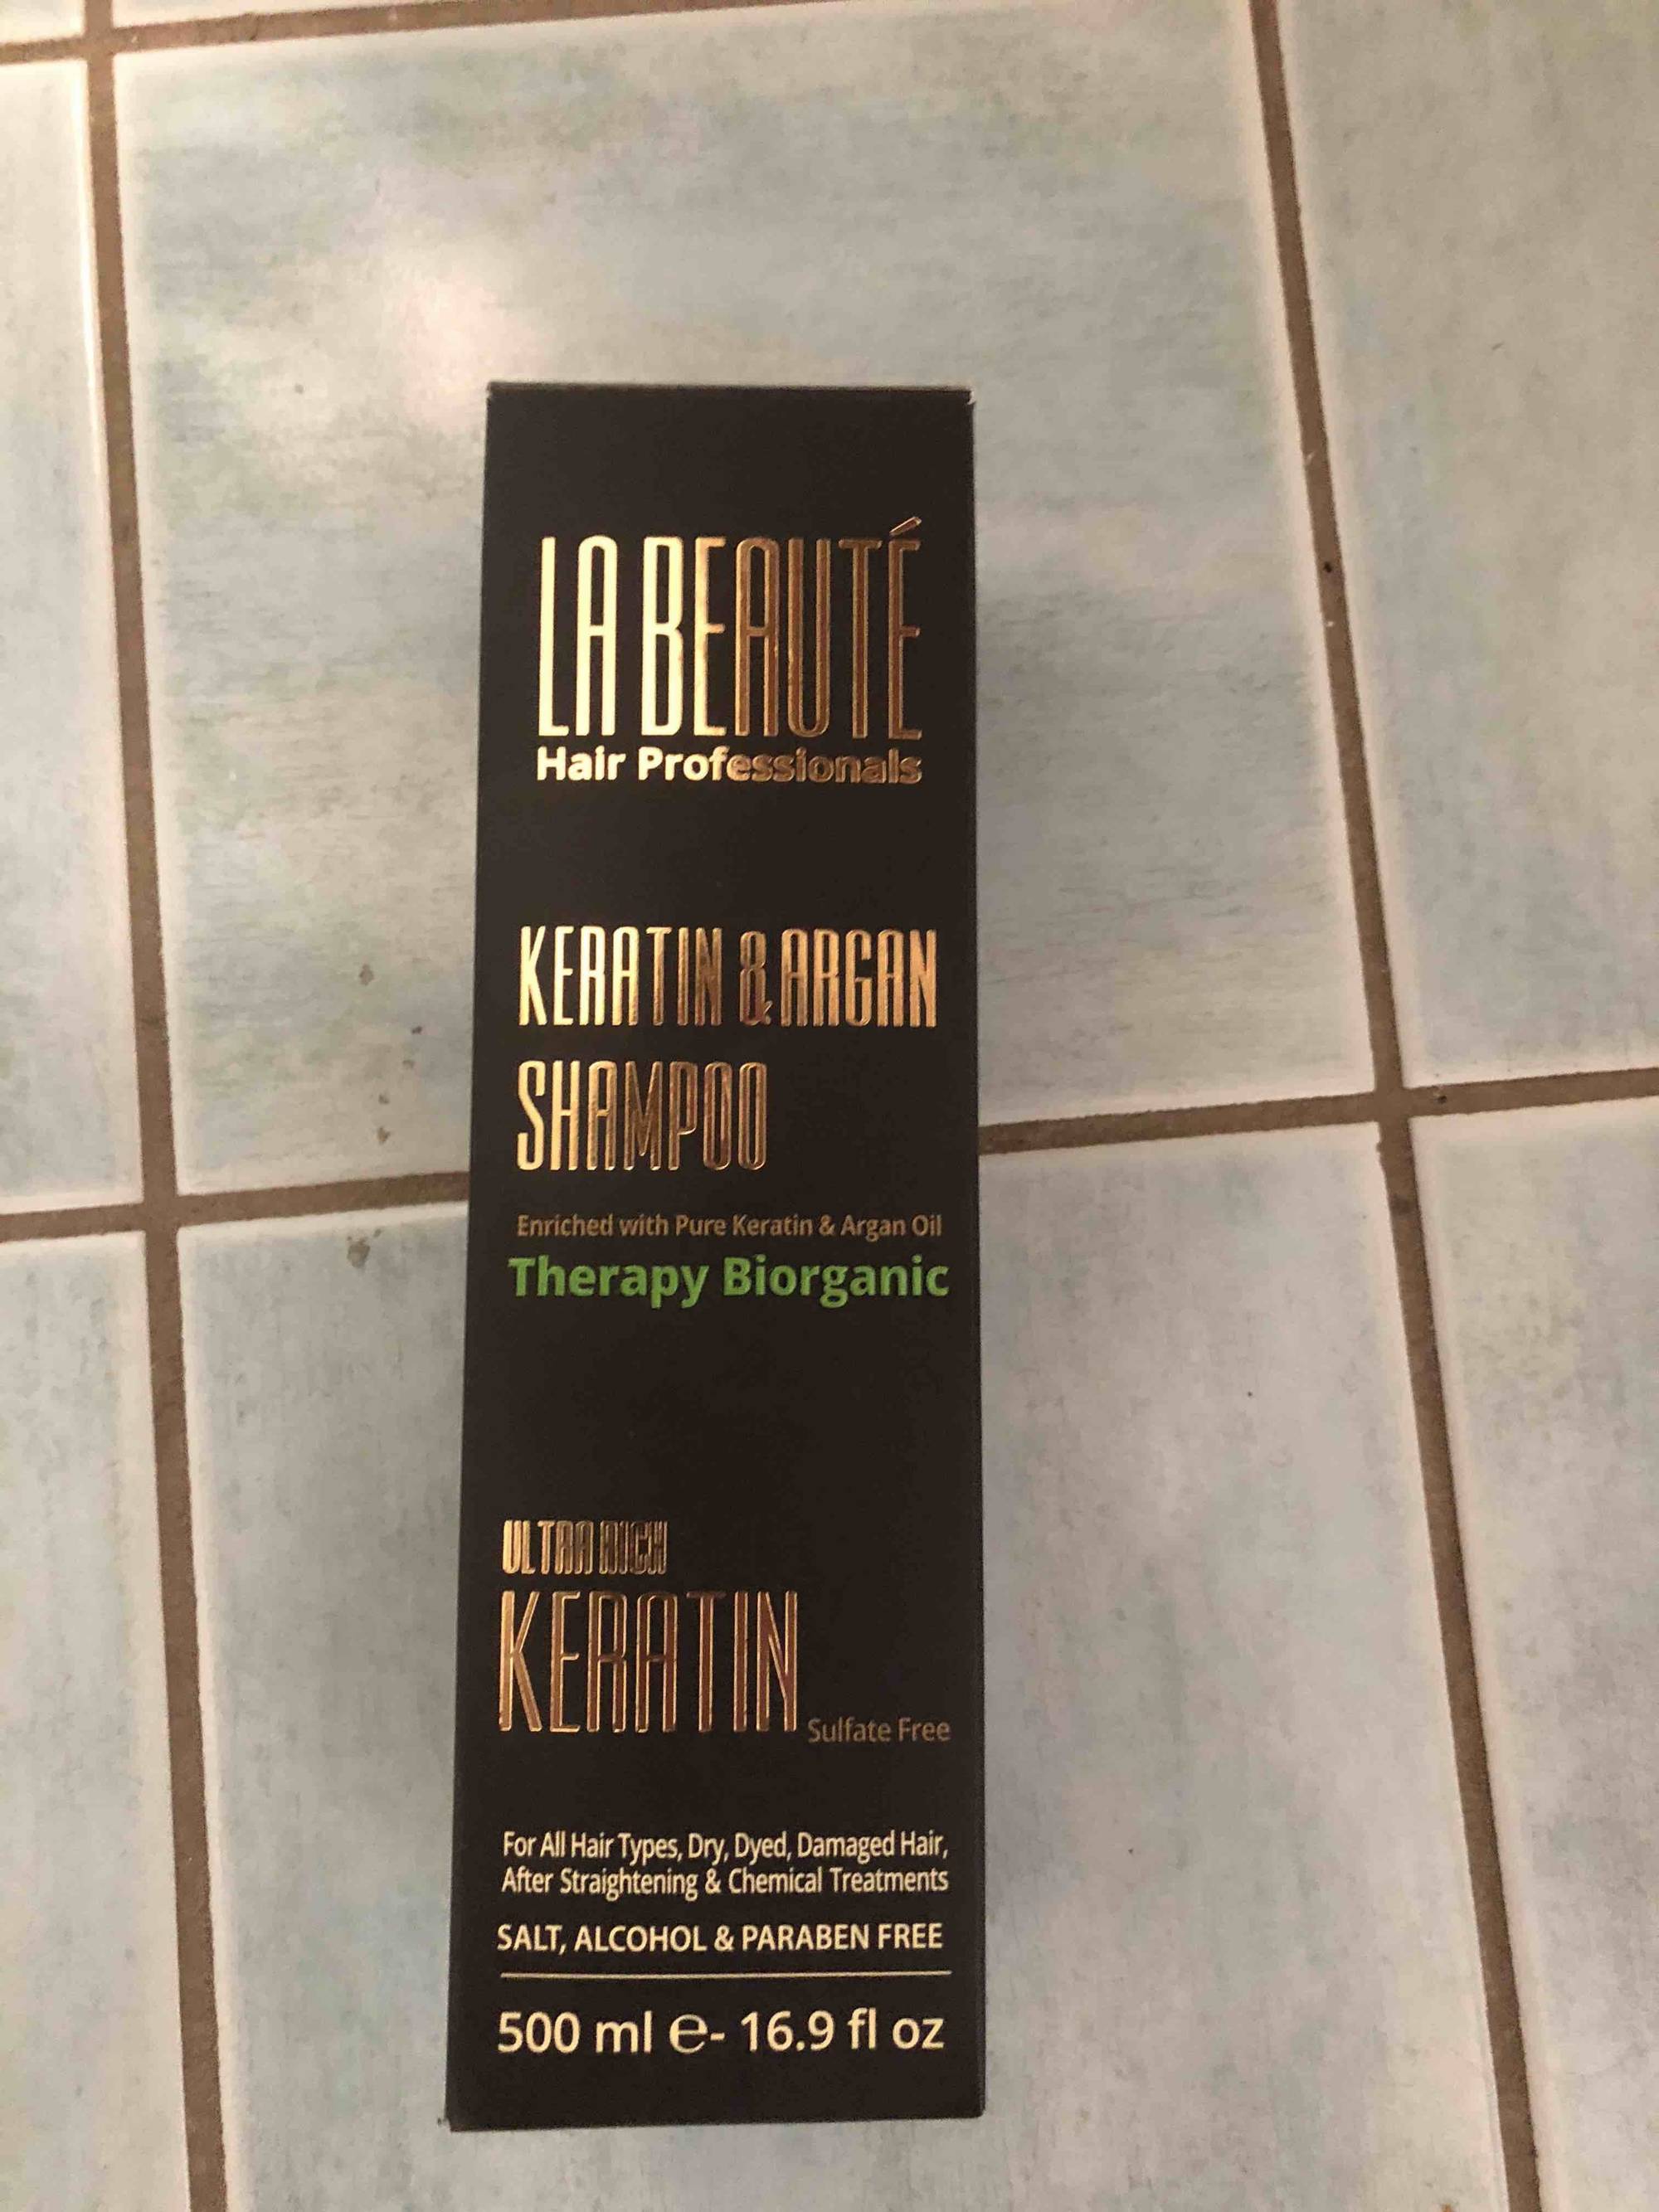 LA BEAUTÉ HAIR PROFESSIONALS - Keratin & argan therapy biorganic - Shampoo